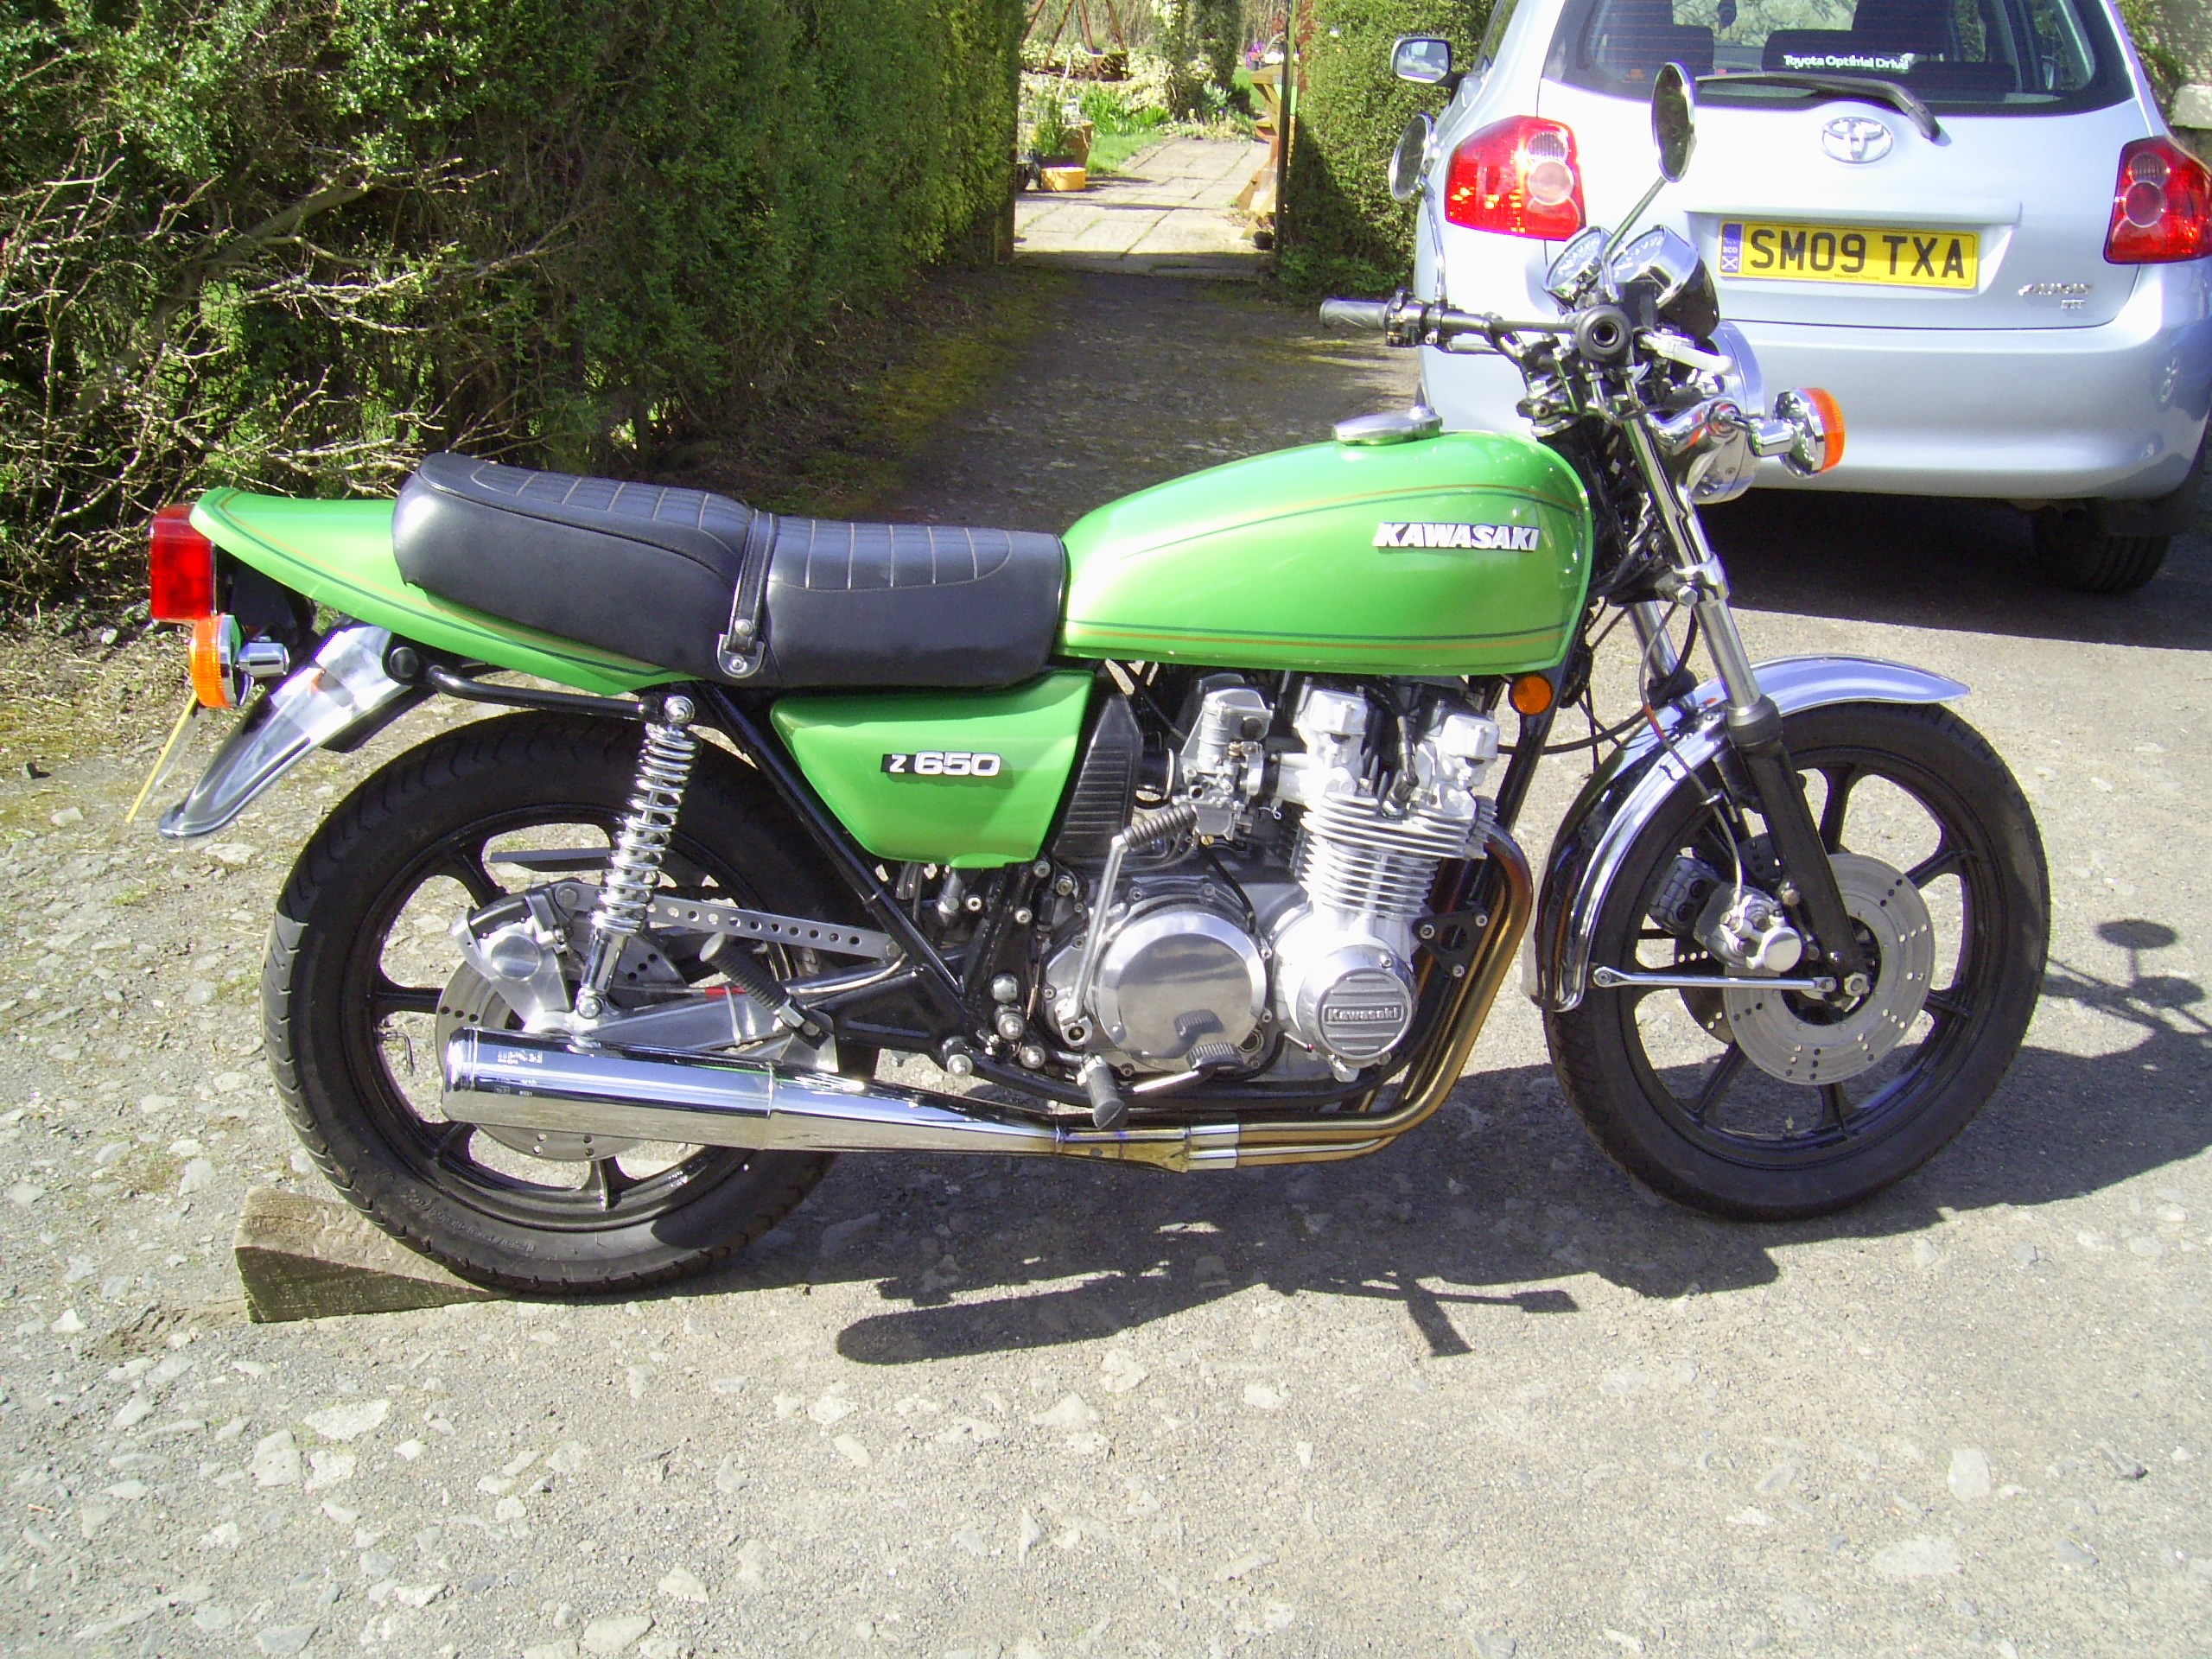 Kawasaki 1980 - from Leask